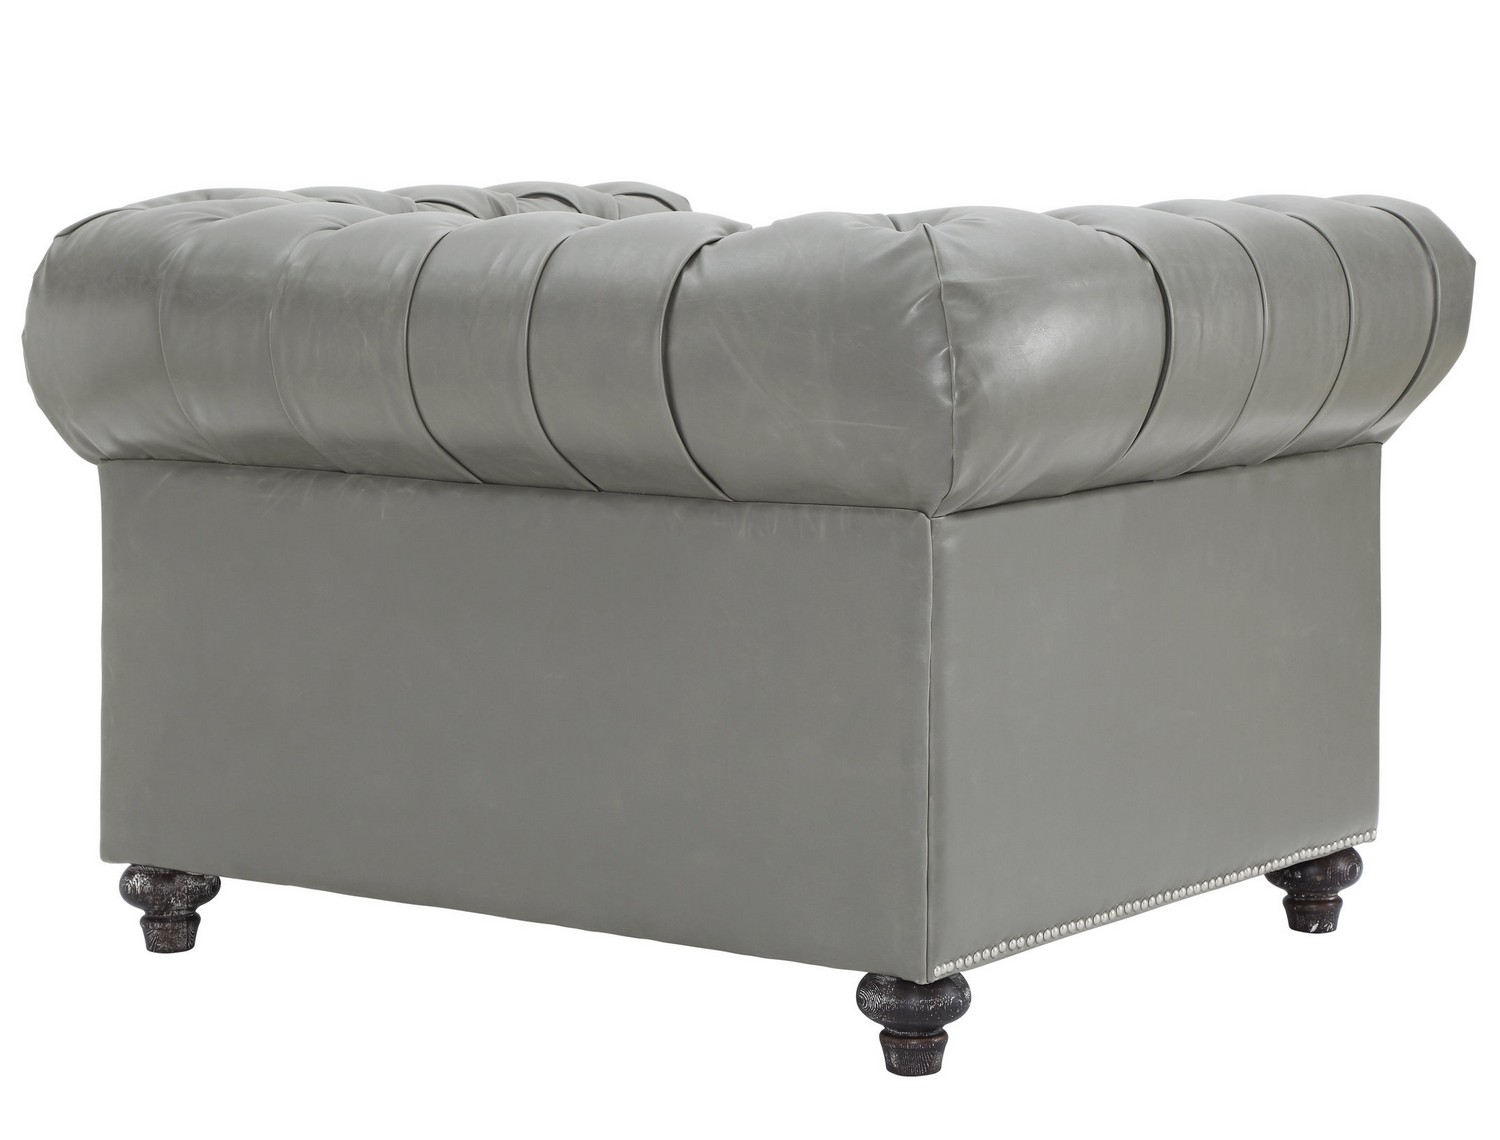 TOV Furniture Durango Rustic Grey Leather Club Chair